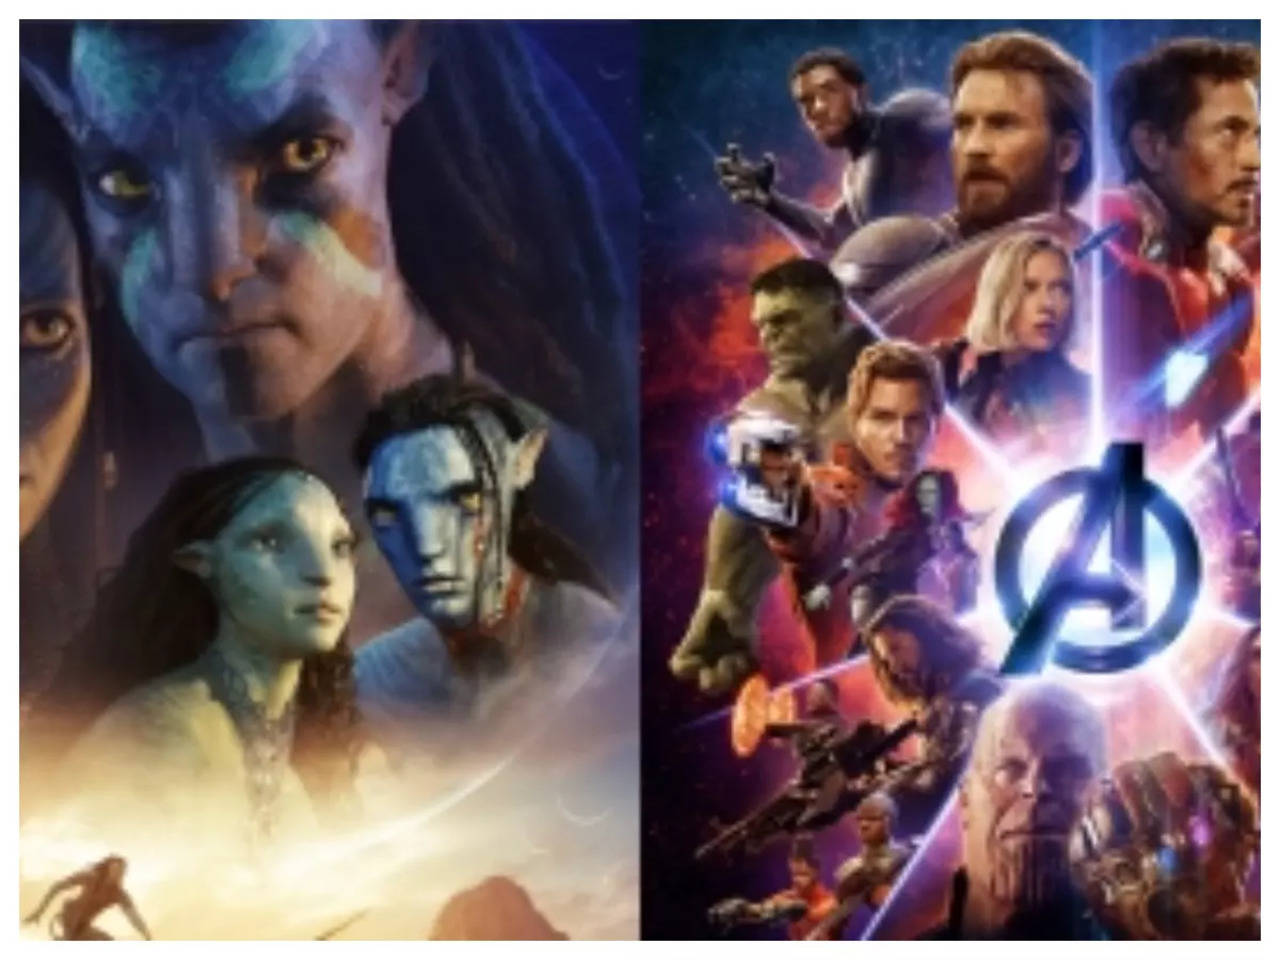 Avengers Endgame has passed Avatar as biggest film ever